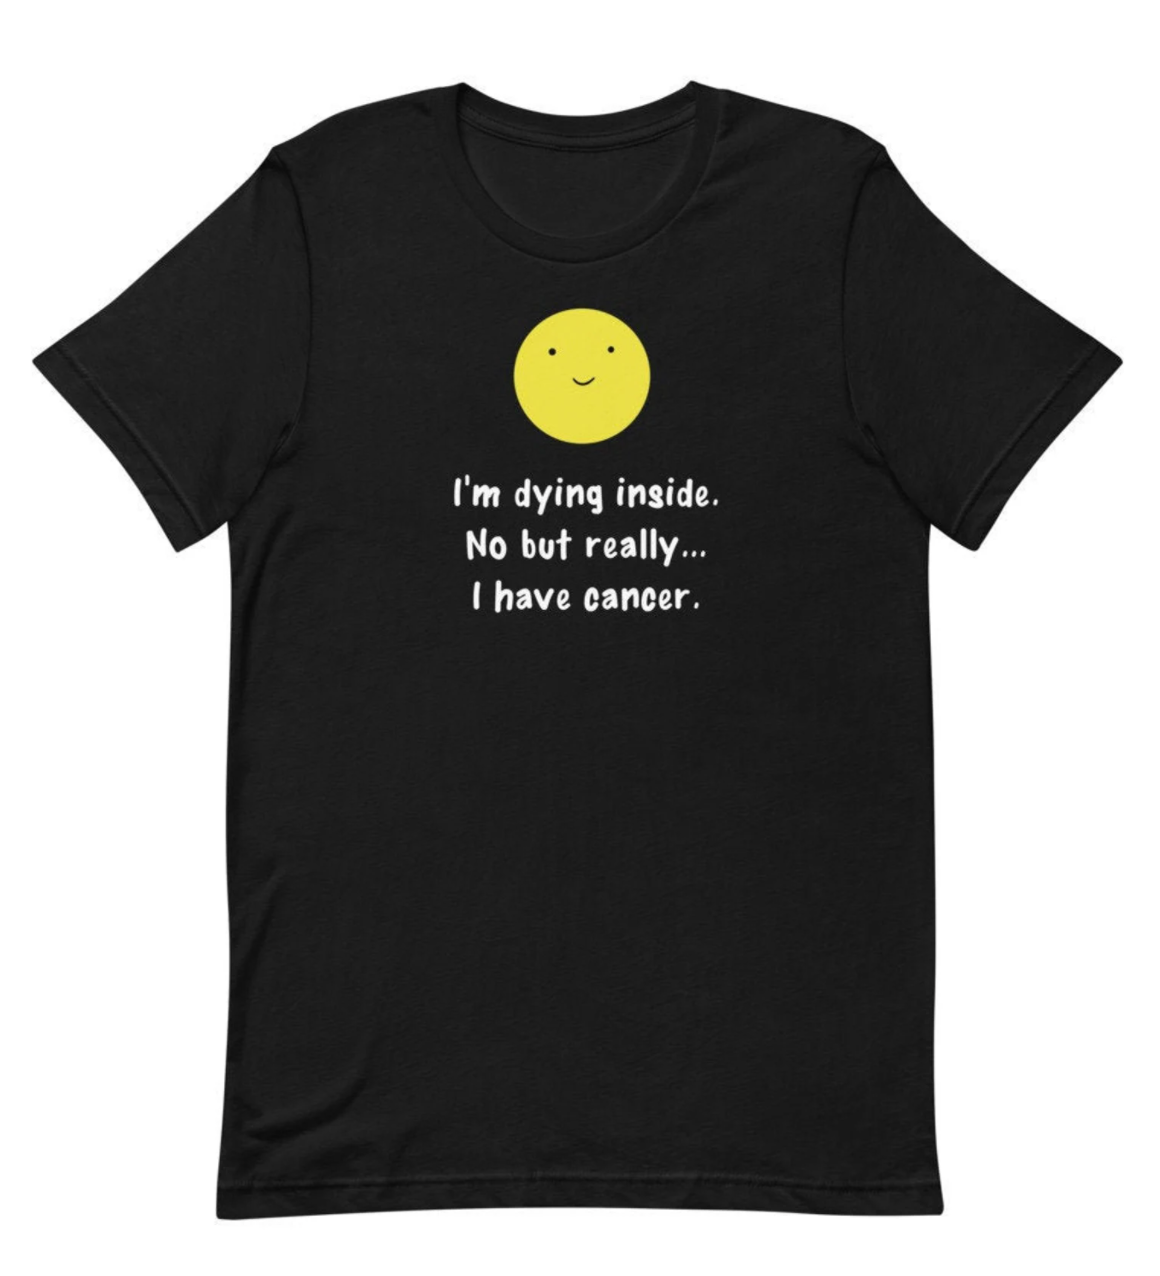 Funny Cancer Shirt - I'm Dying Inside - Cancer Shirt - Funny Cancer Gift - Cancer Gifts - Cancer Awareness Shirt - Chemo Shirt